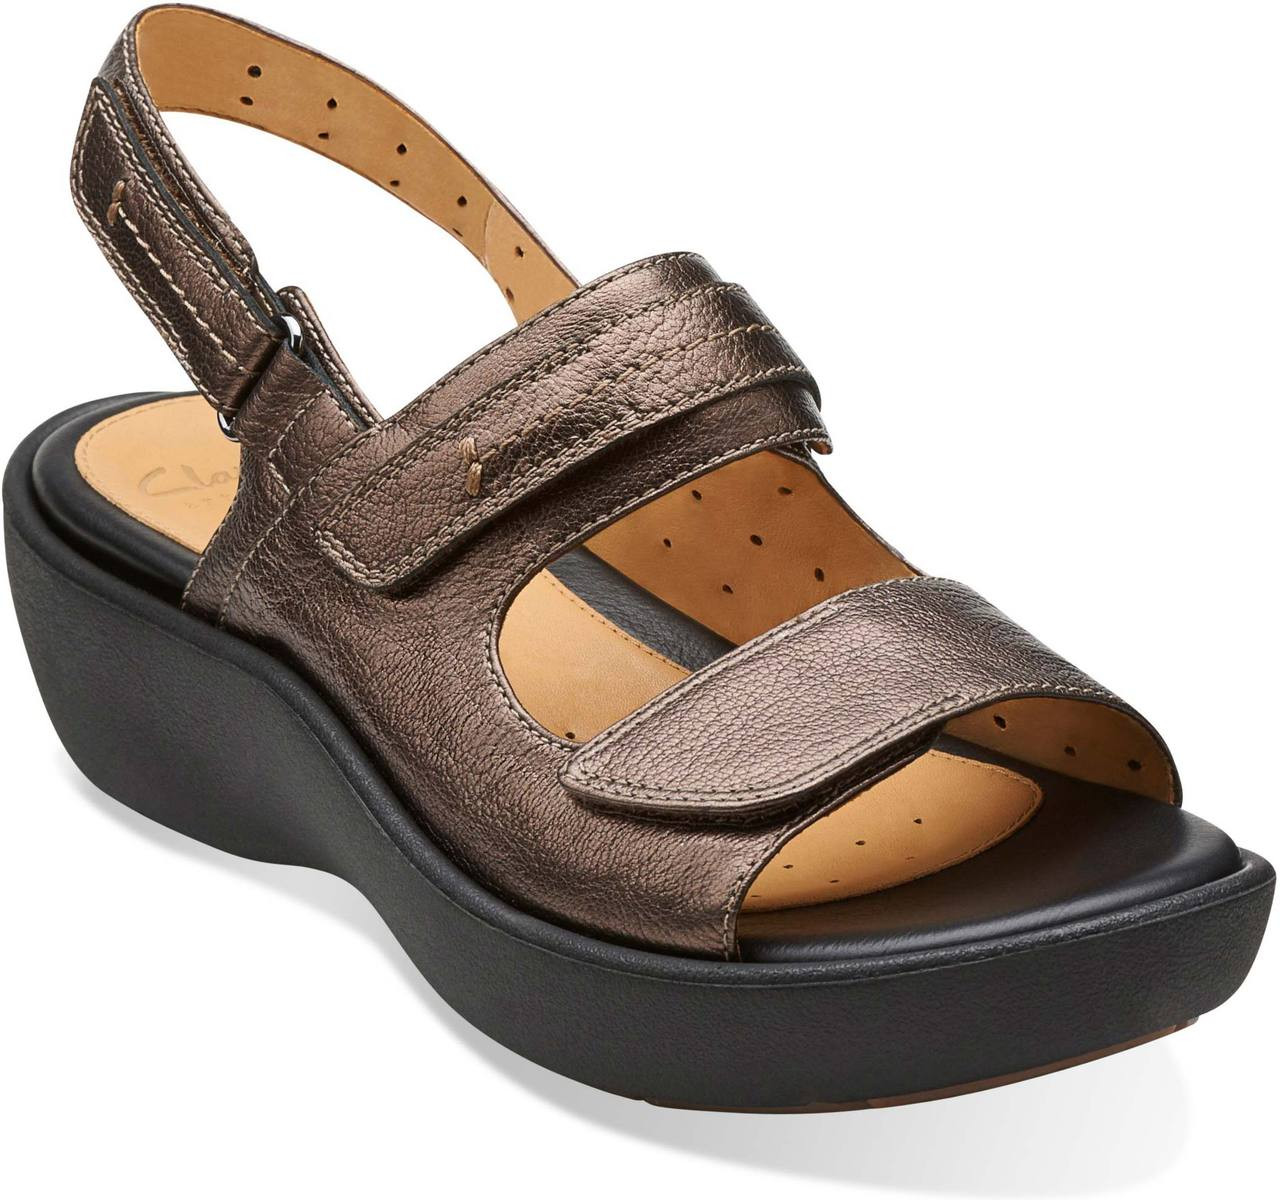 clarks unstructured sandals canada